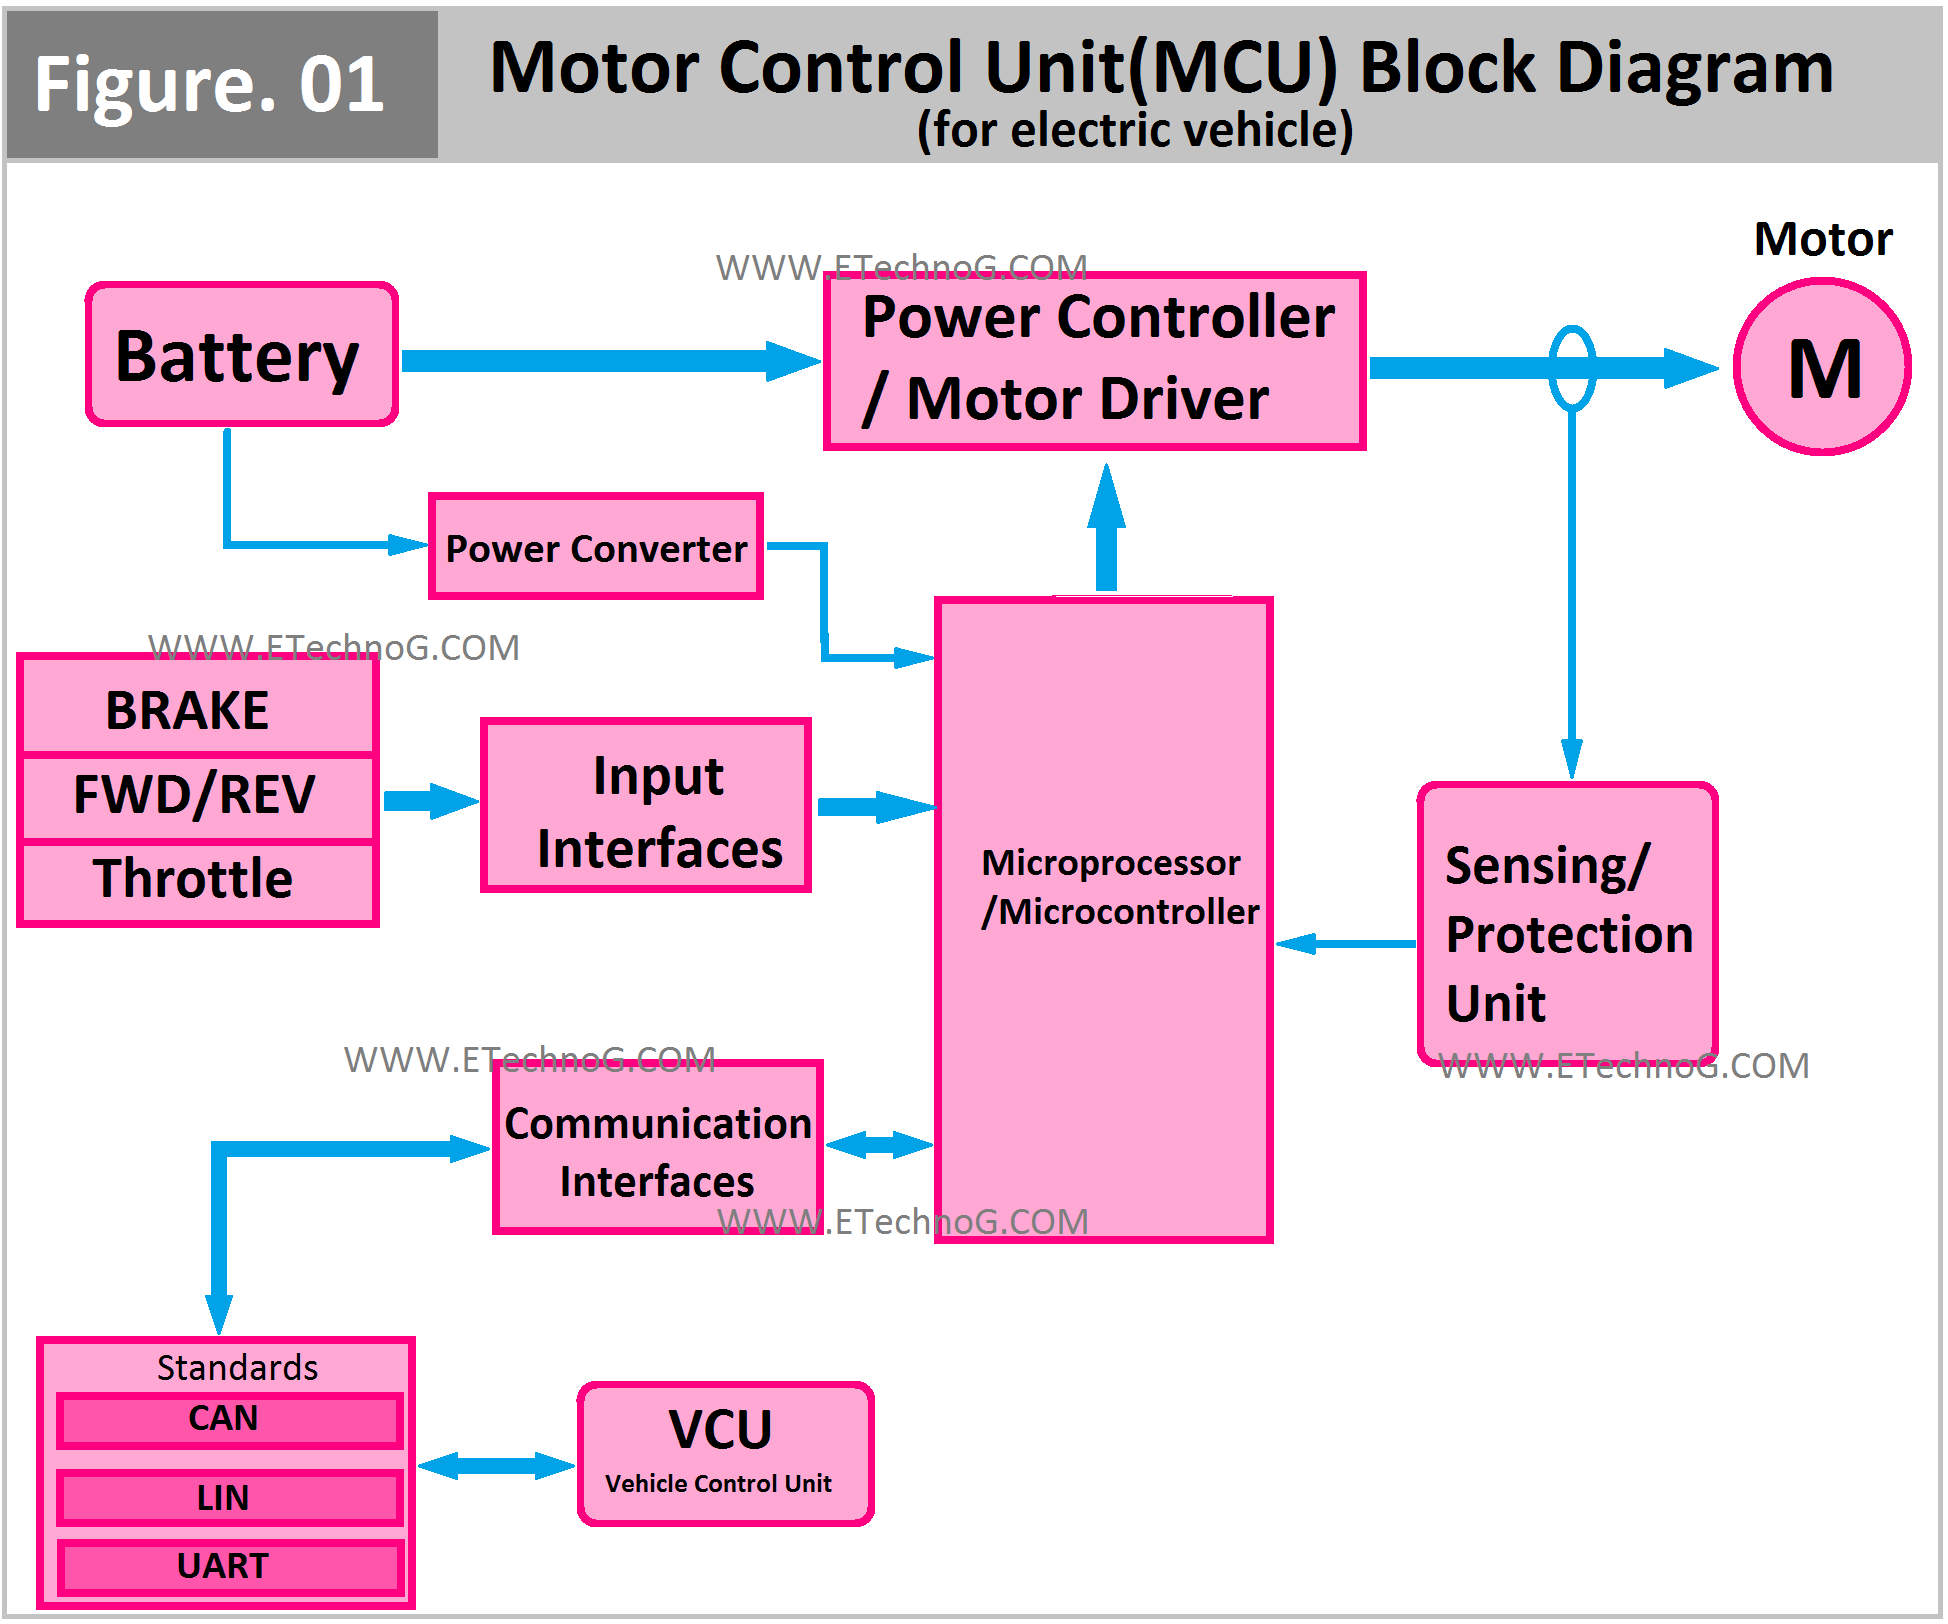 Motor Control Unit(MCU) Block Diagram